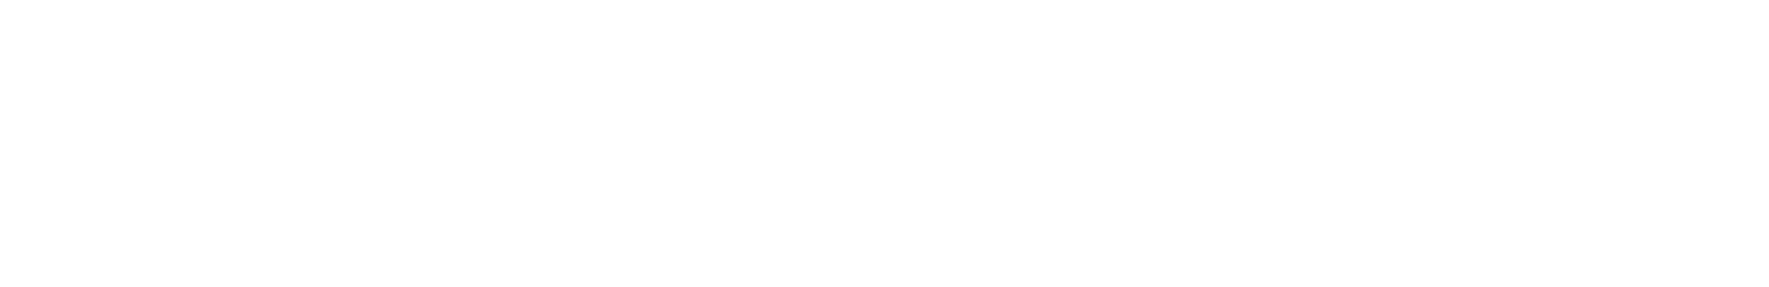 Minnesota Retina Associates Logo